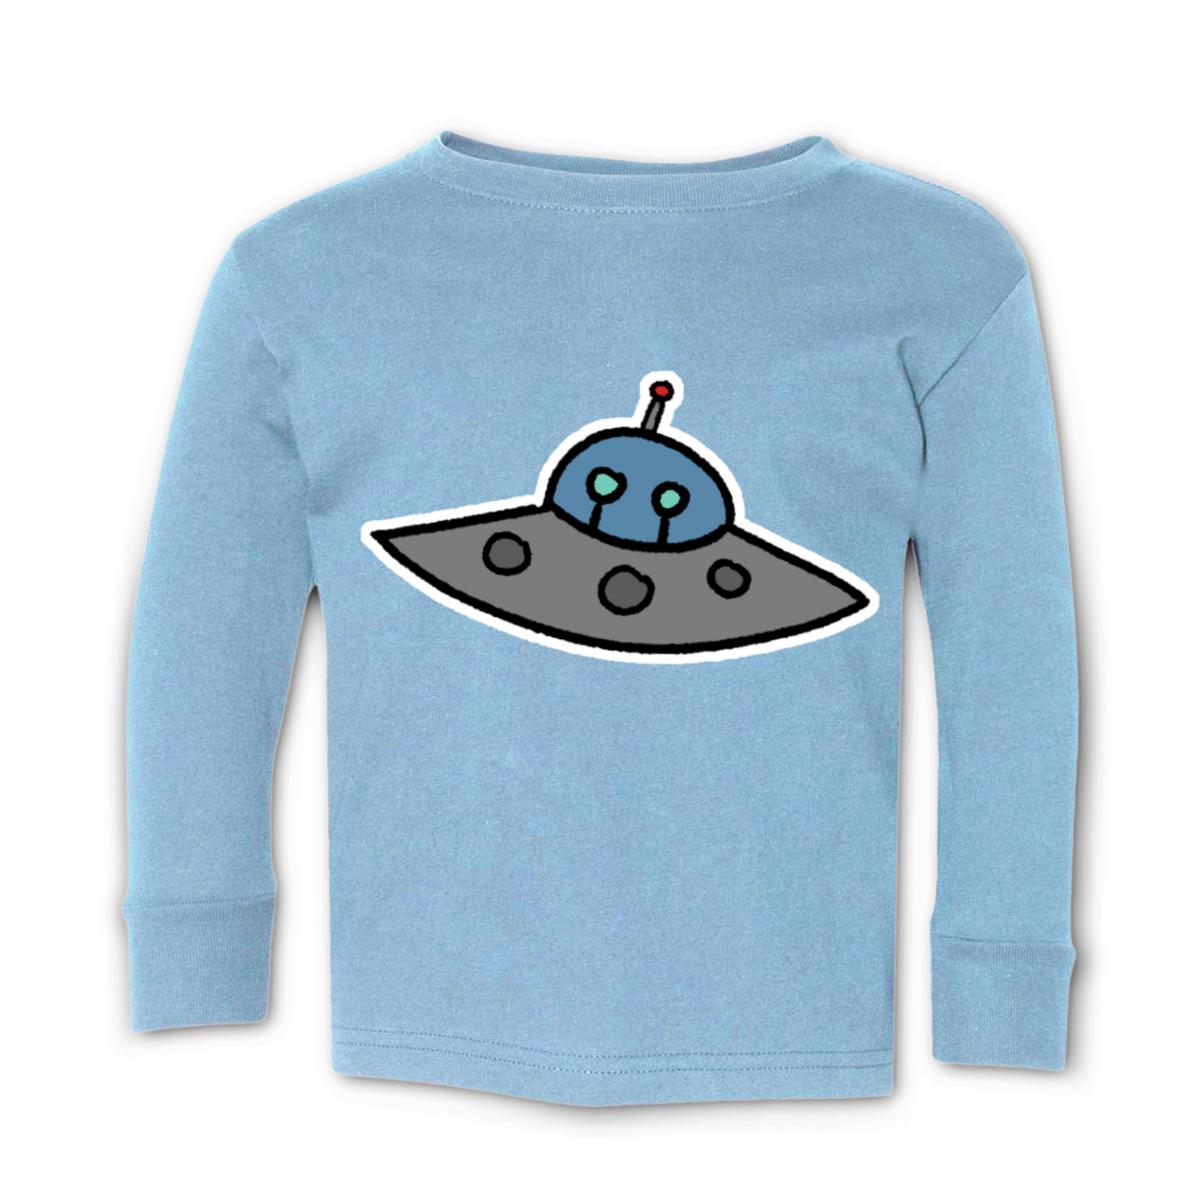 Flying Saucer Toddler Long Sleeve Tee 2T light-blue